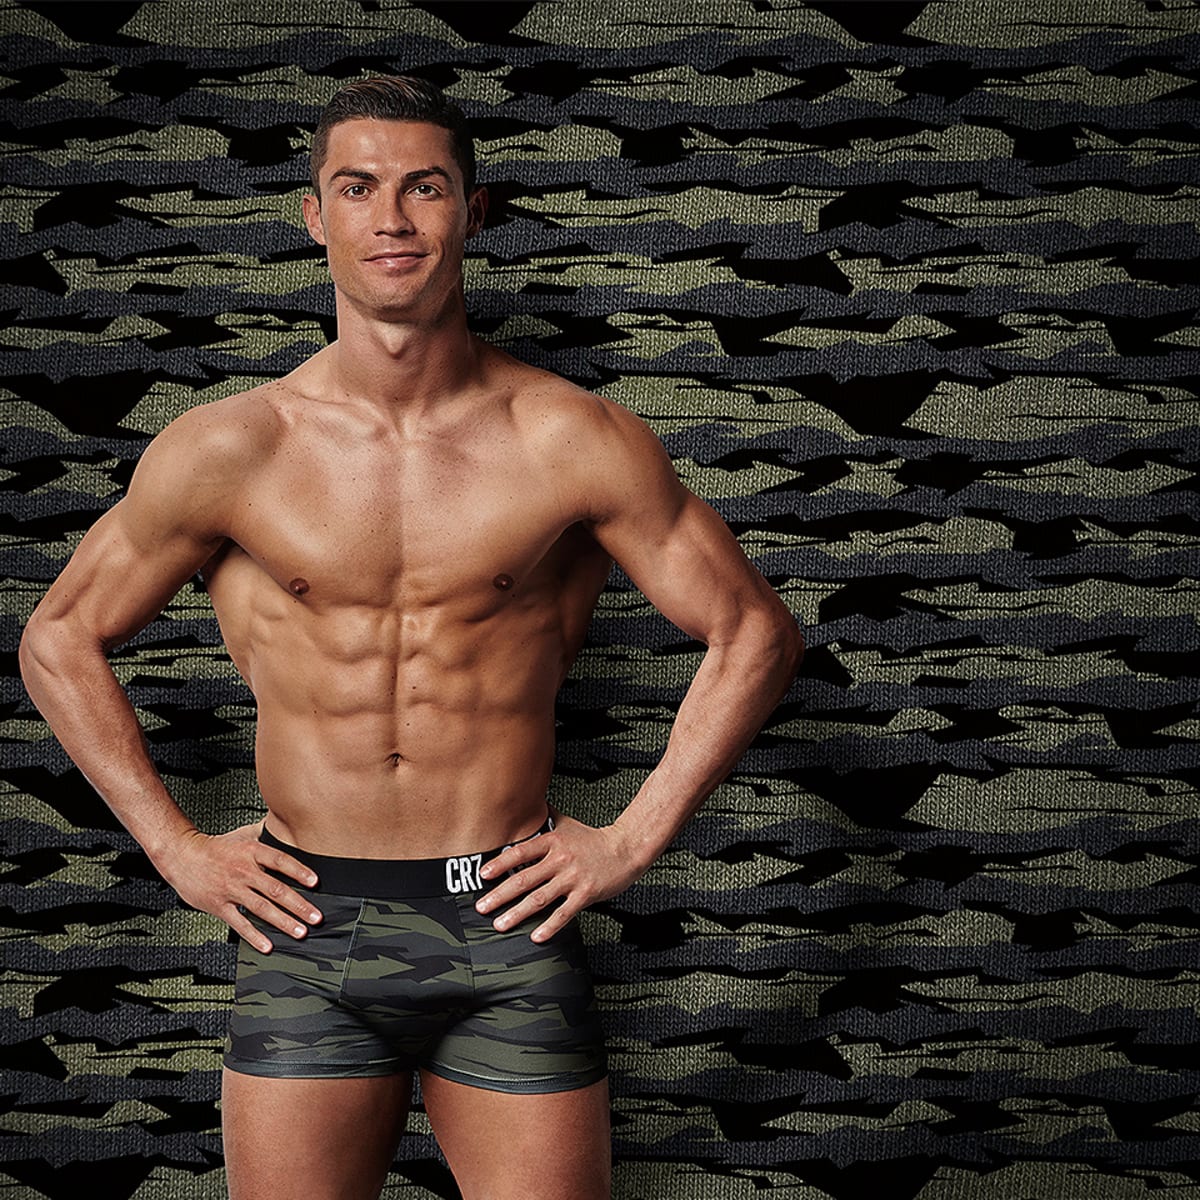 Jakke korrelat Bær Cristiano Ronaldo Looks Ripped in New CR7 Underwear Campaign: Photos -  Men's Journal